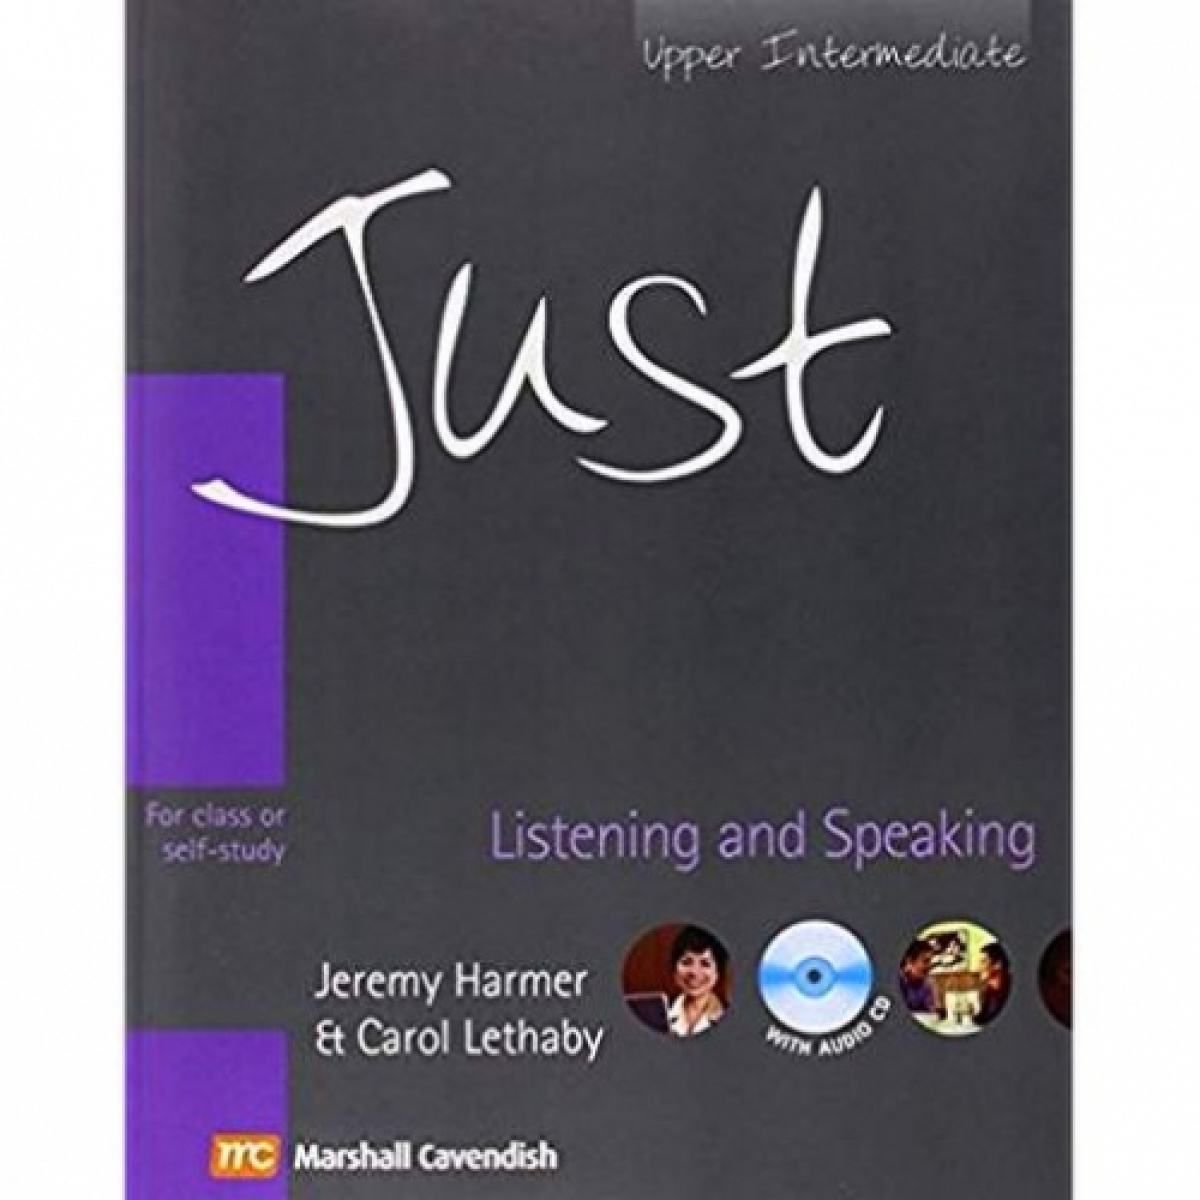 Just Listening And Speaking. Upper Intermediate Level. British English Edition +Audio CD 